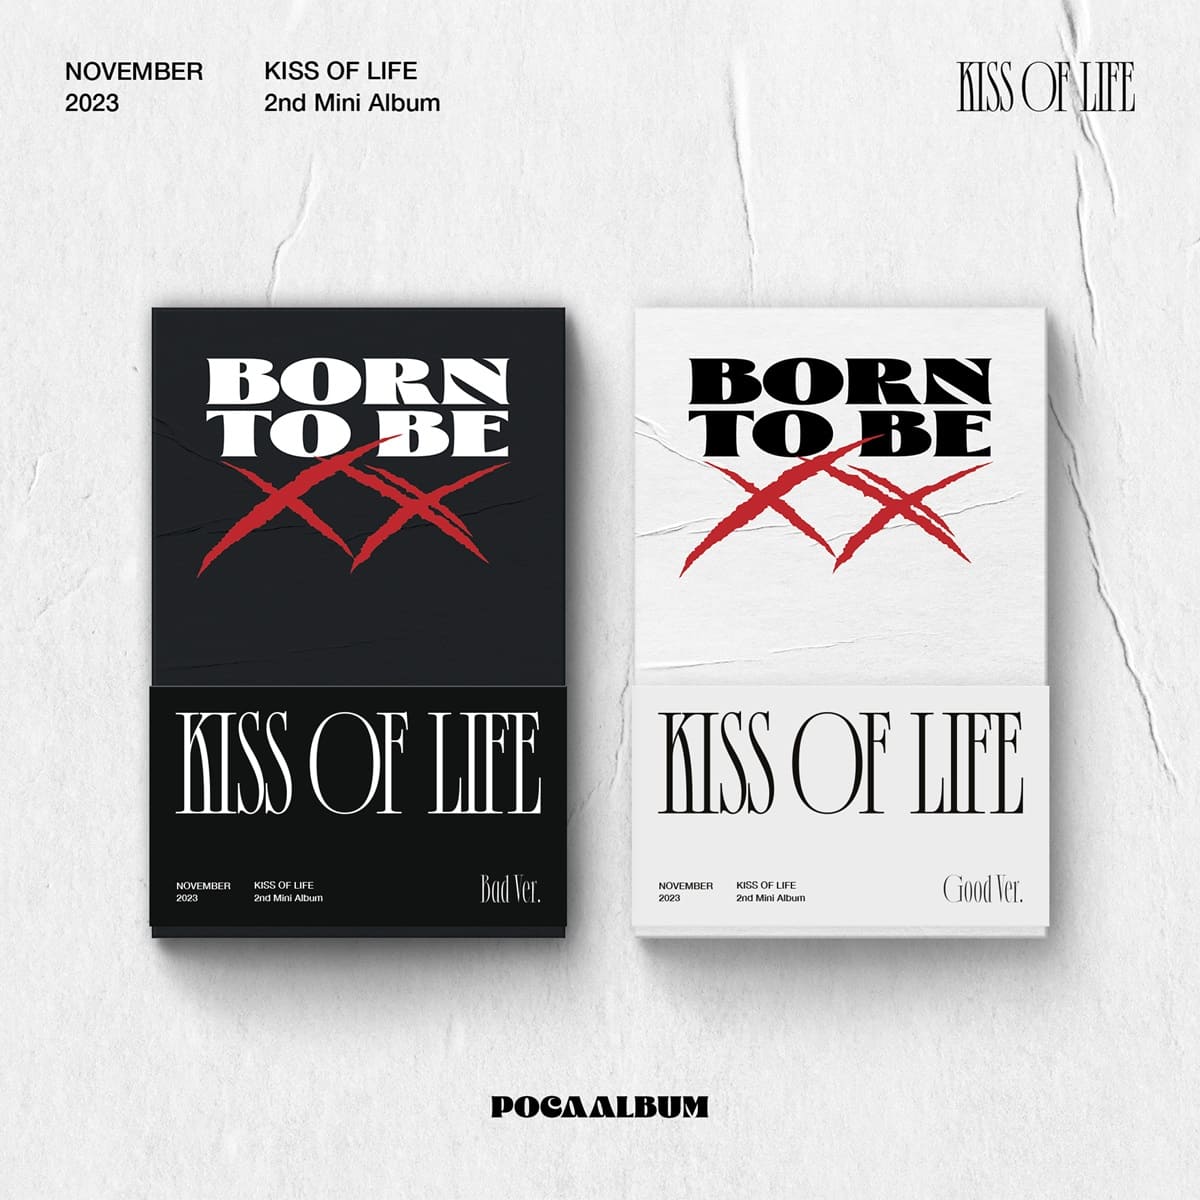 [PRE-ORDER] KISS OF LIFE - 2nd Mini Album [Born to be XX] (POCA ALBUM) + Photocard